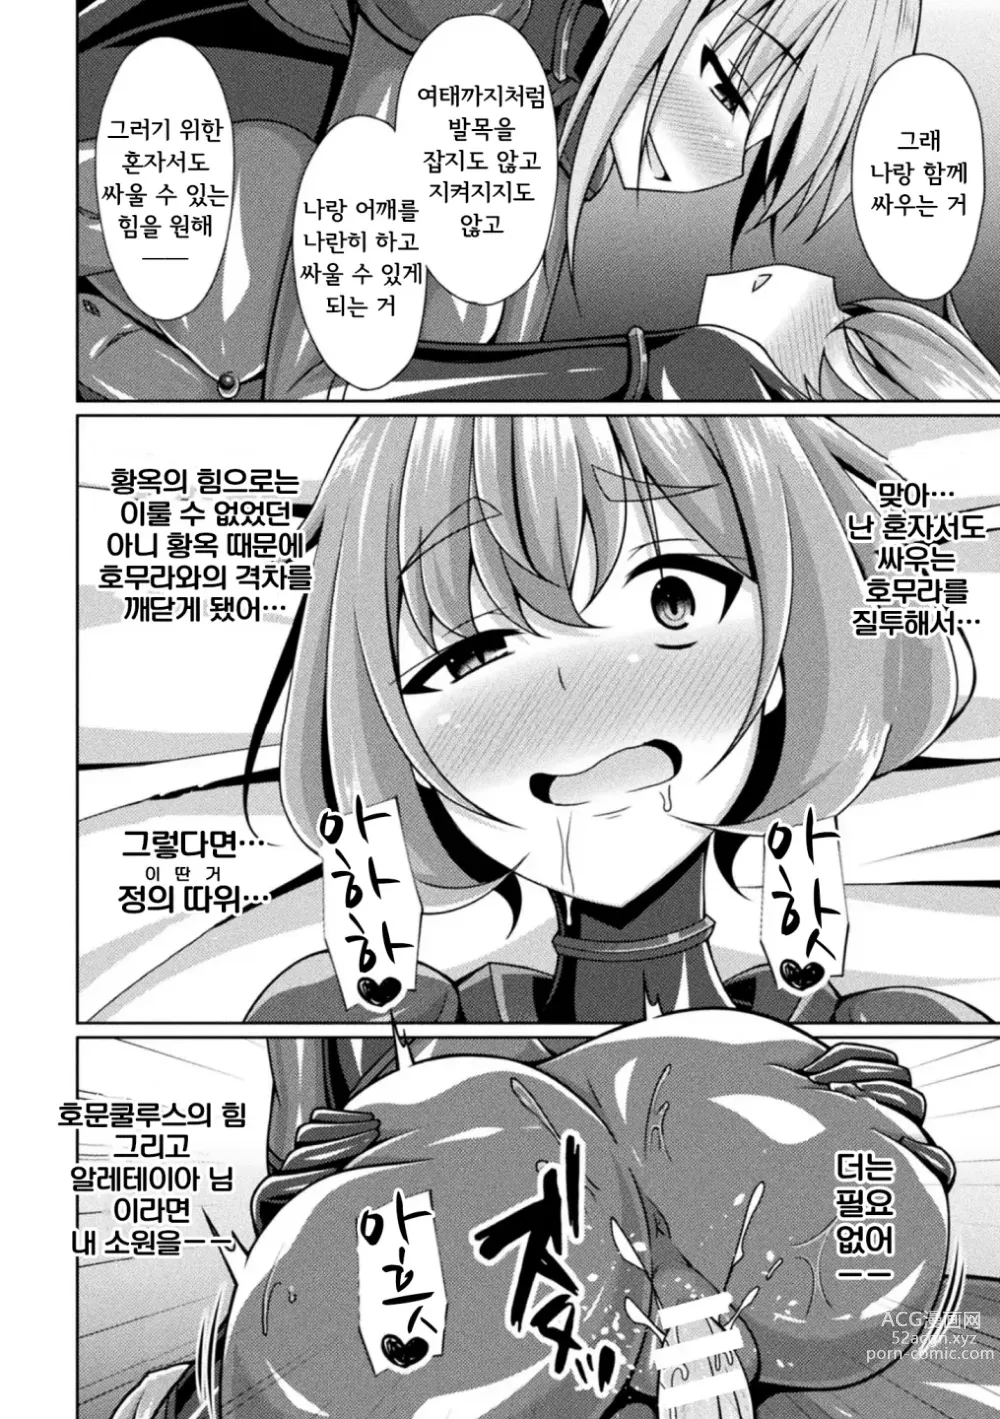 Page 10 of manga 황옥천희 글리터 스타즈 ep4. 전파되는 악의, 재탄생!! 사영예희